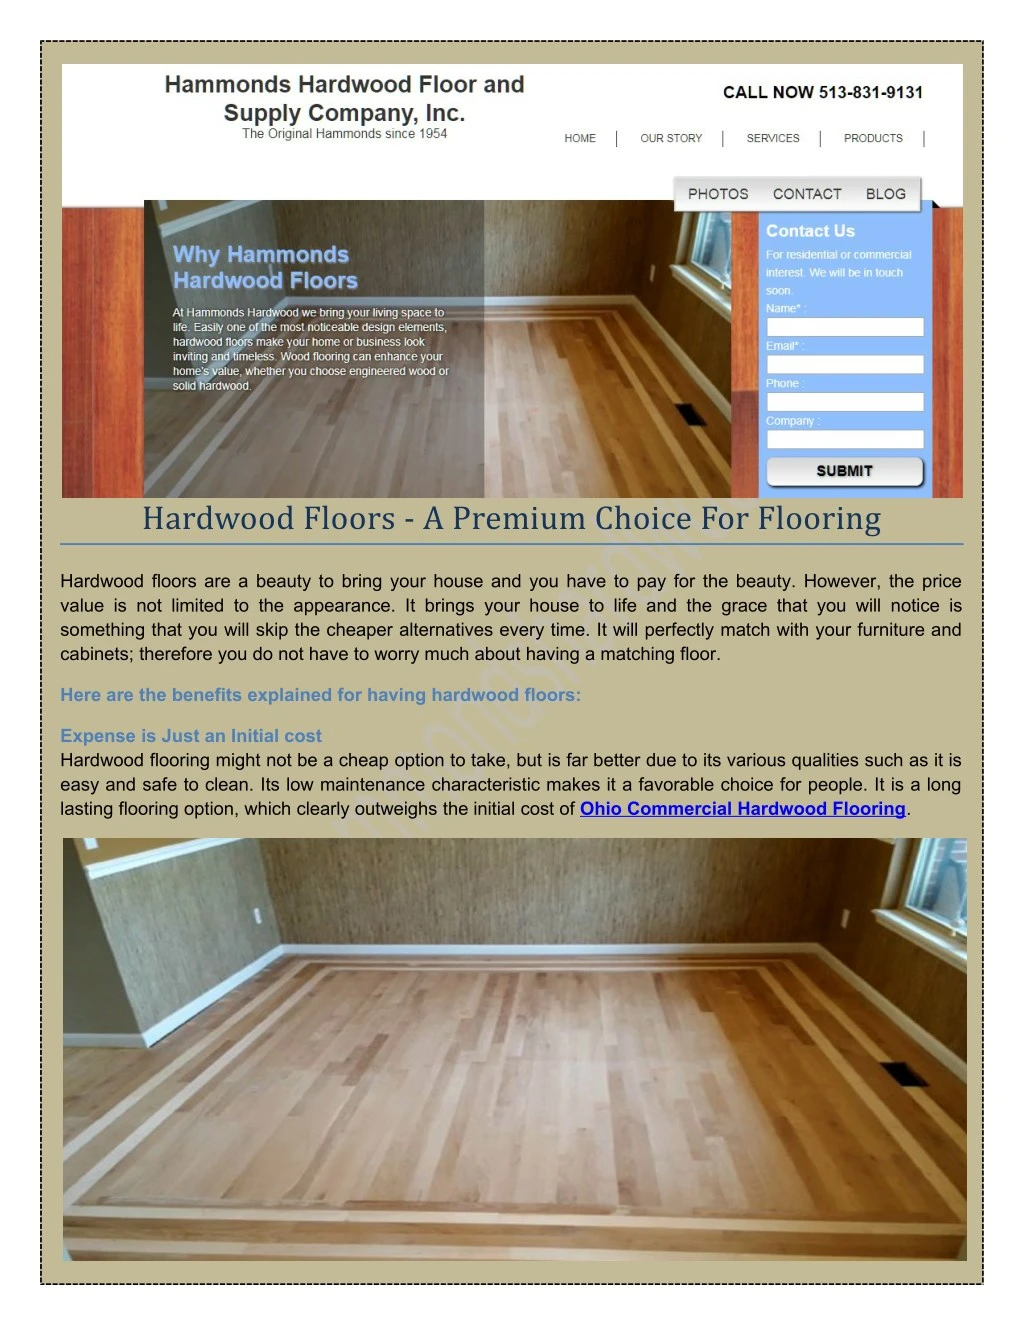 hardwood floors a premium choice for flooring